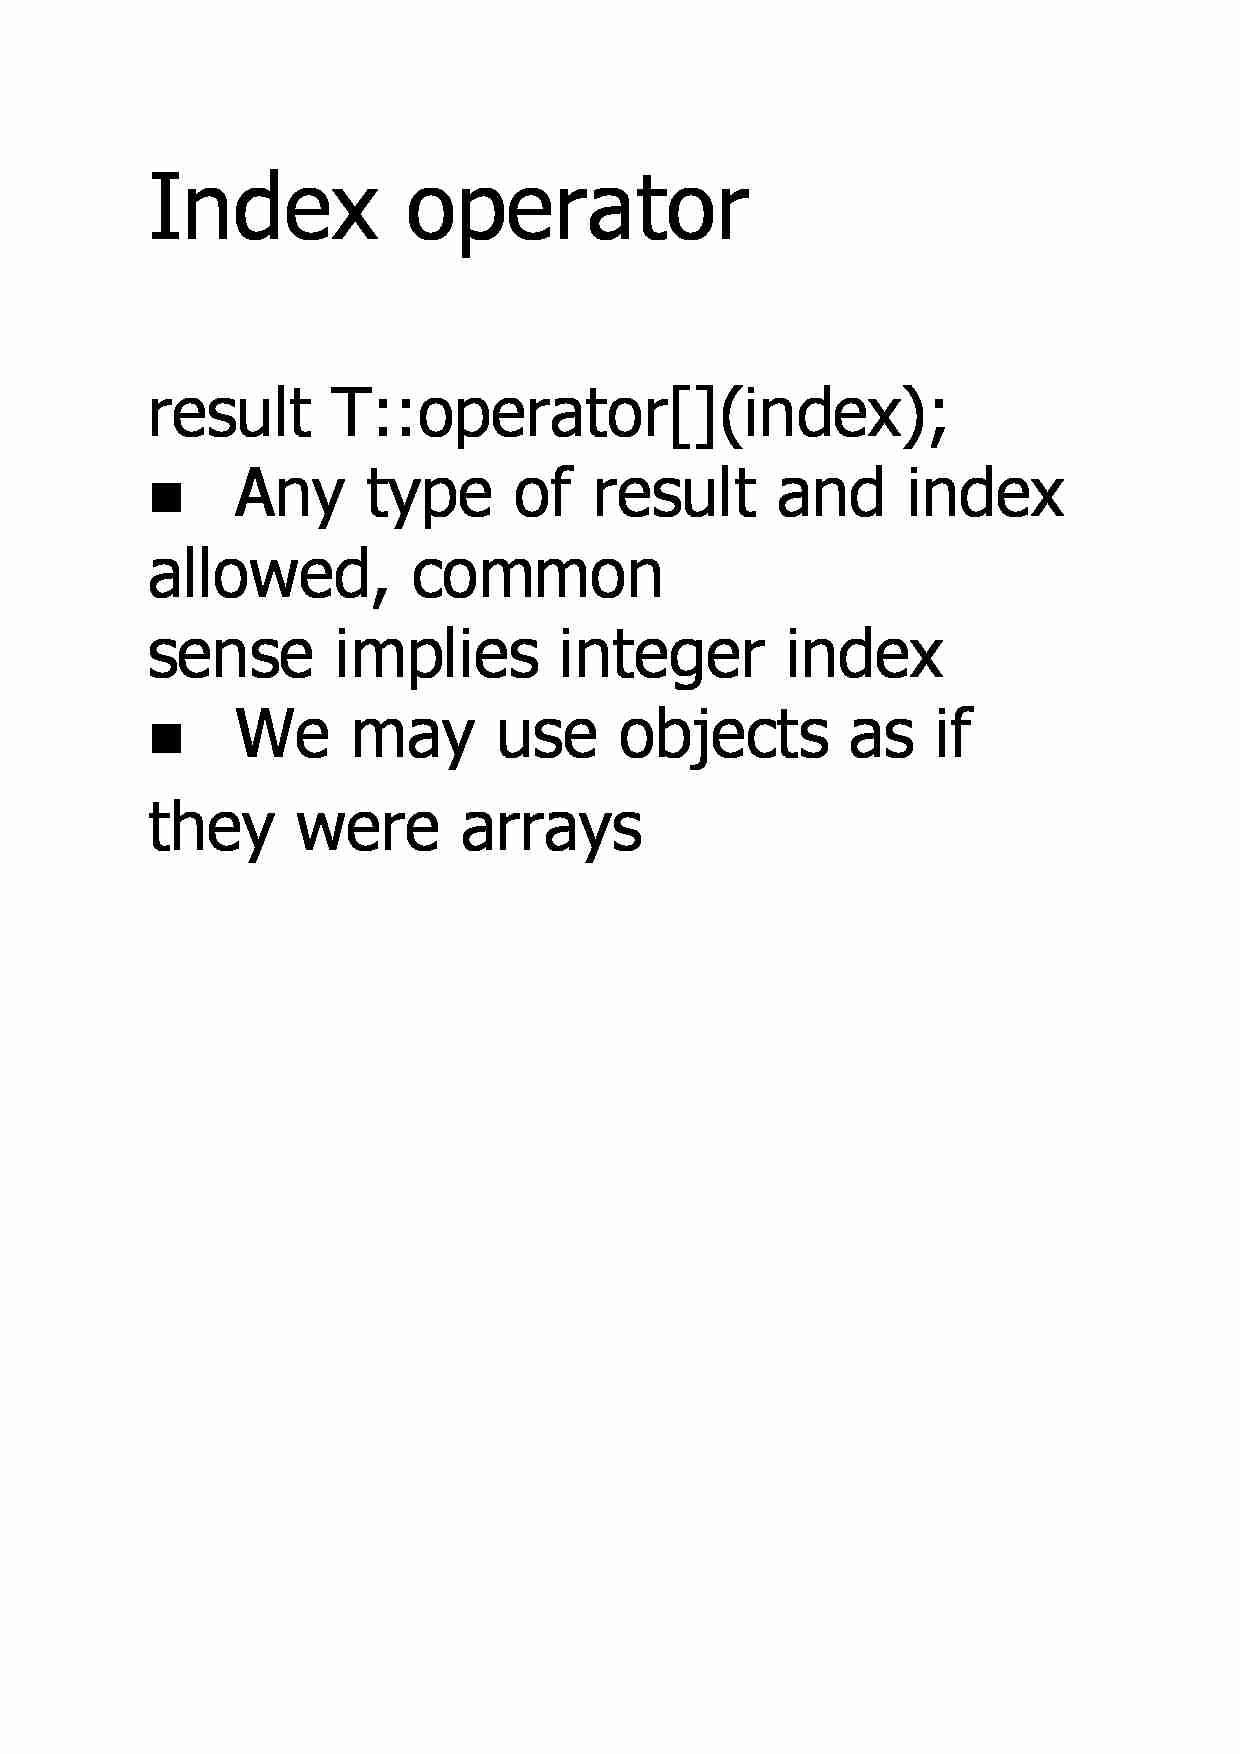 Index operator - strona 1